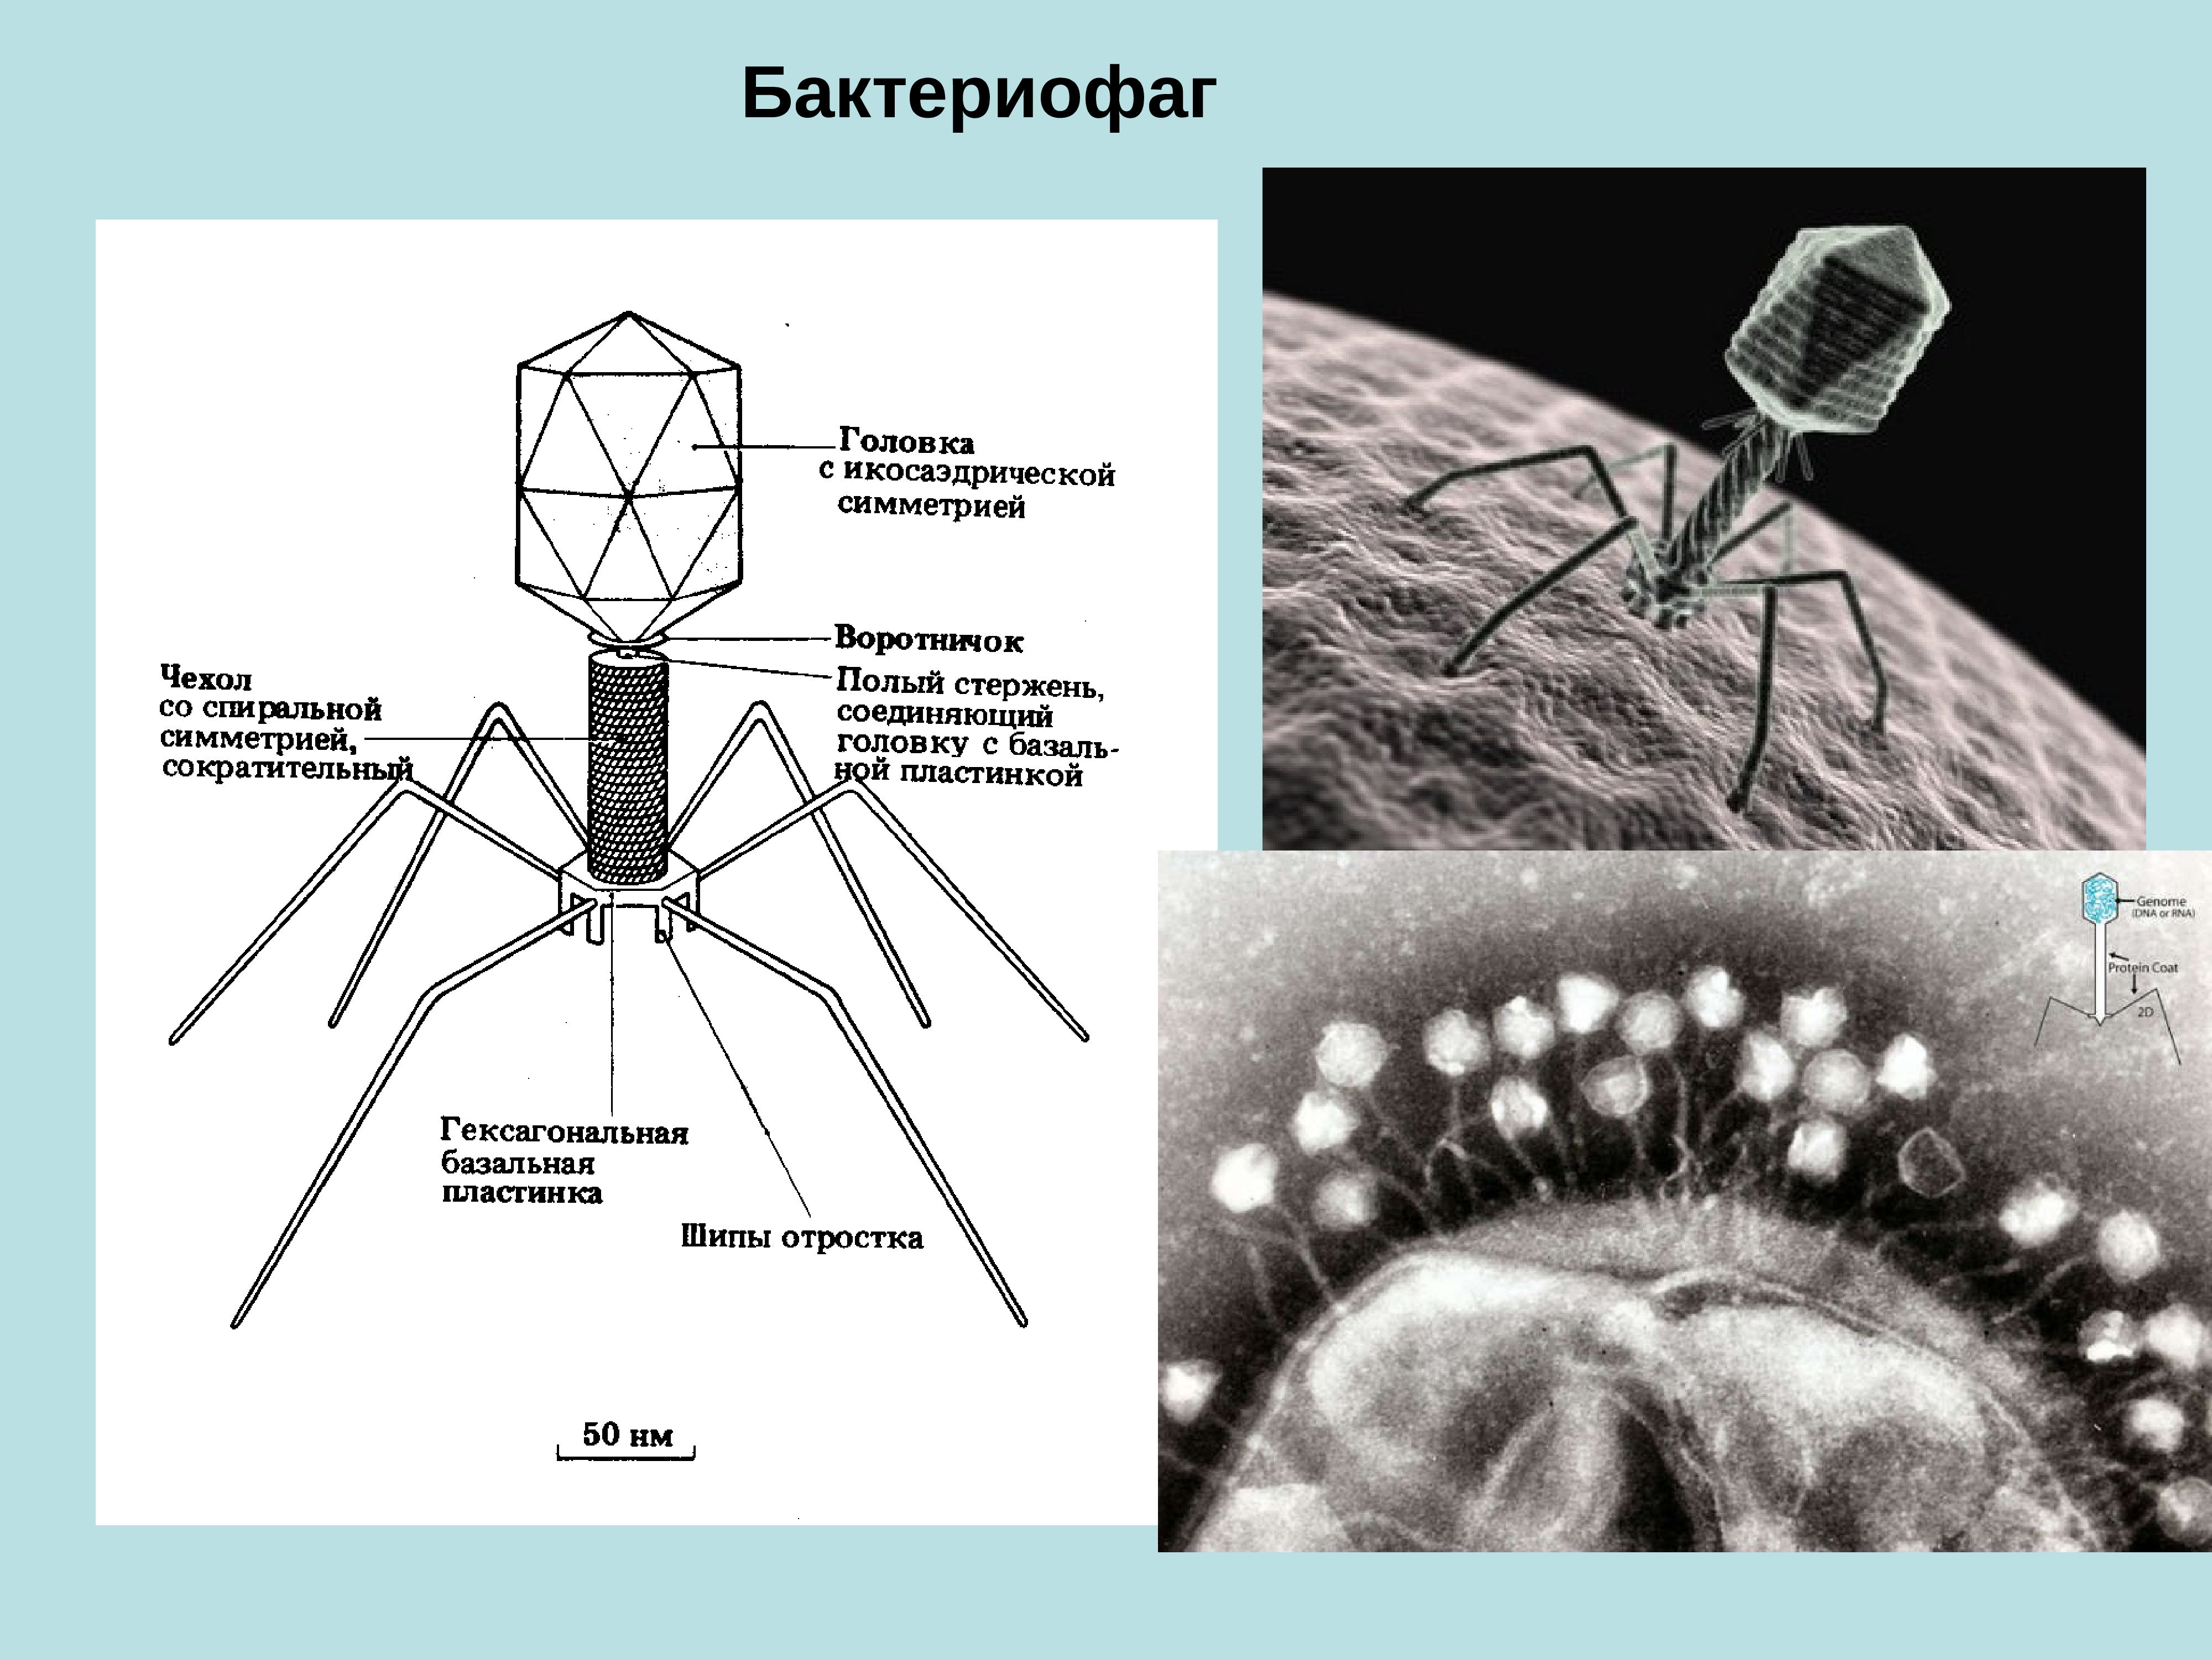 Бактериофагия. Капсид бактериофага. Строение бактериофага микробиология. Бактериофаги Myoviridae. Строение фага микробиология.